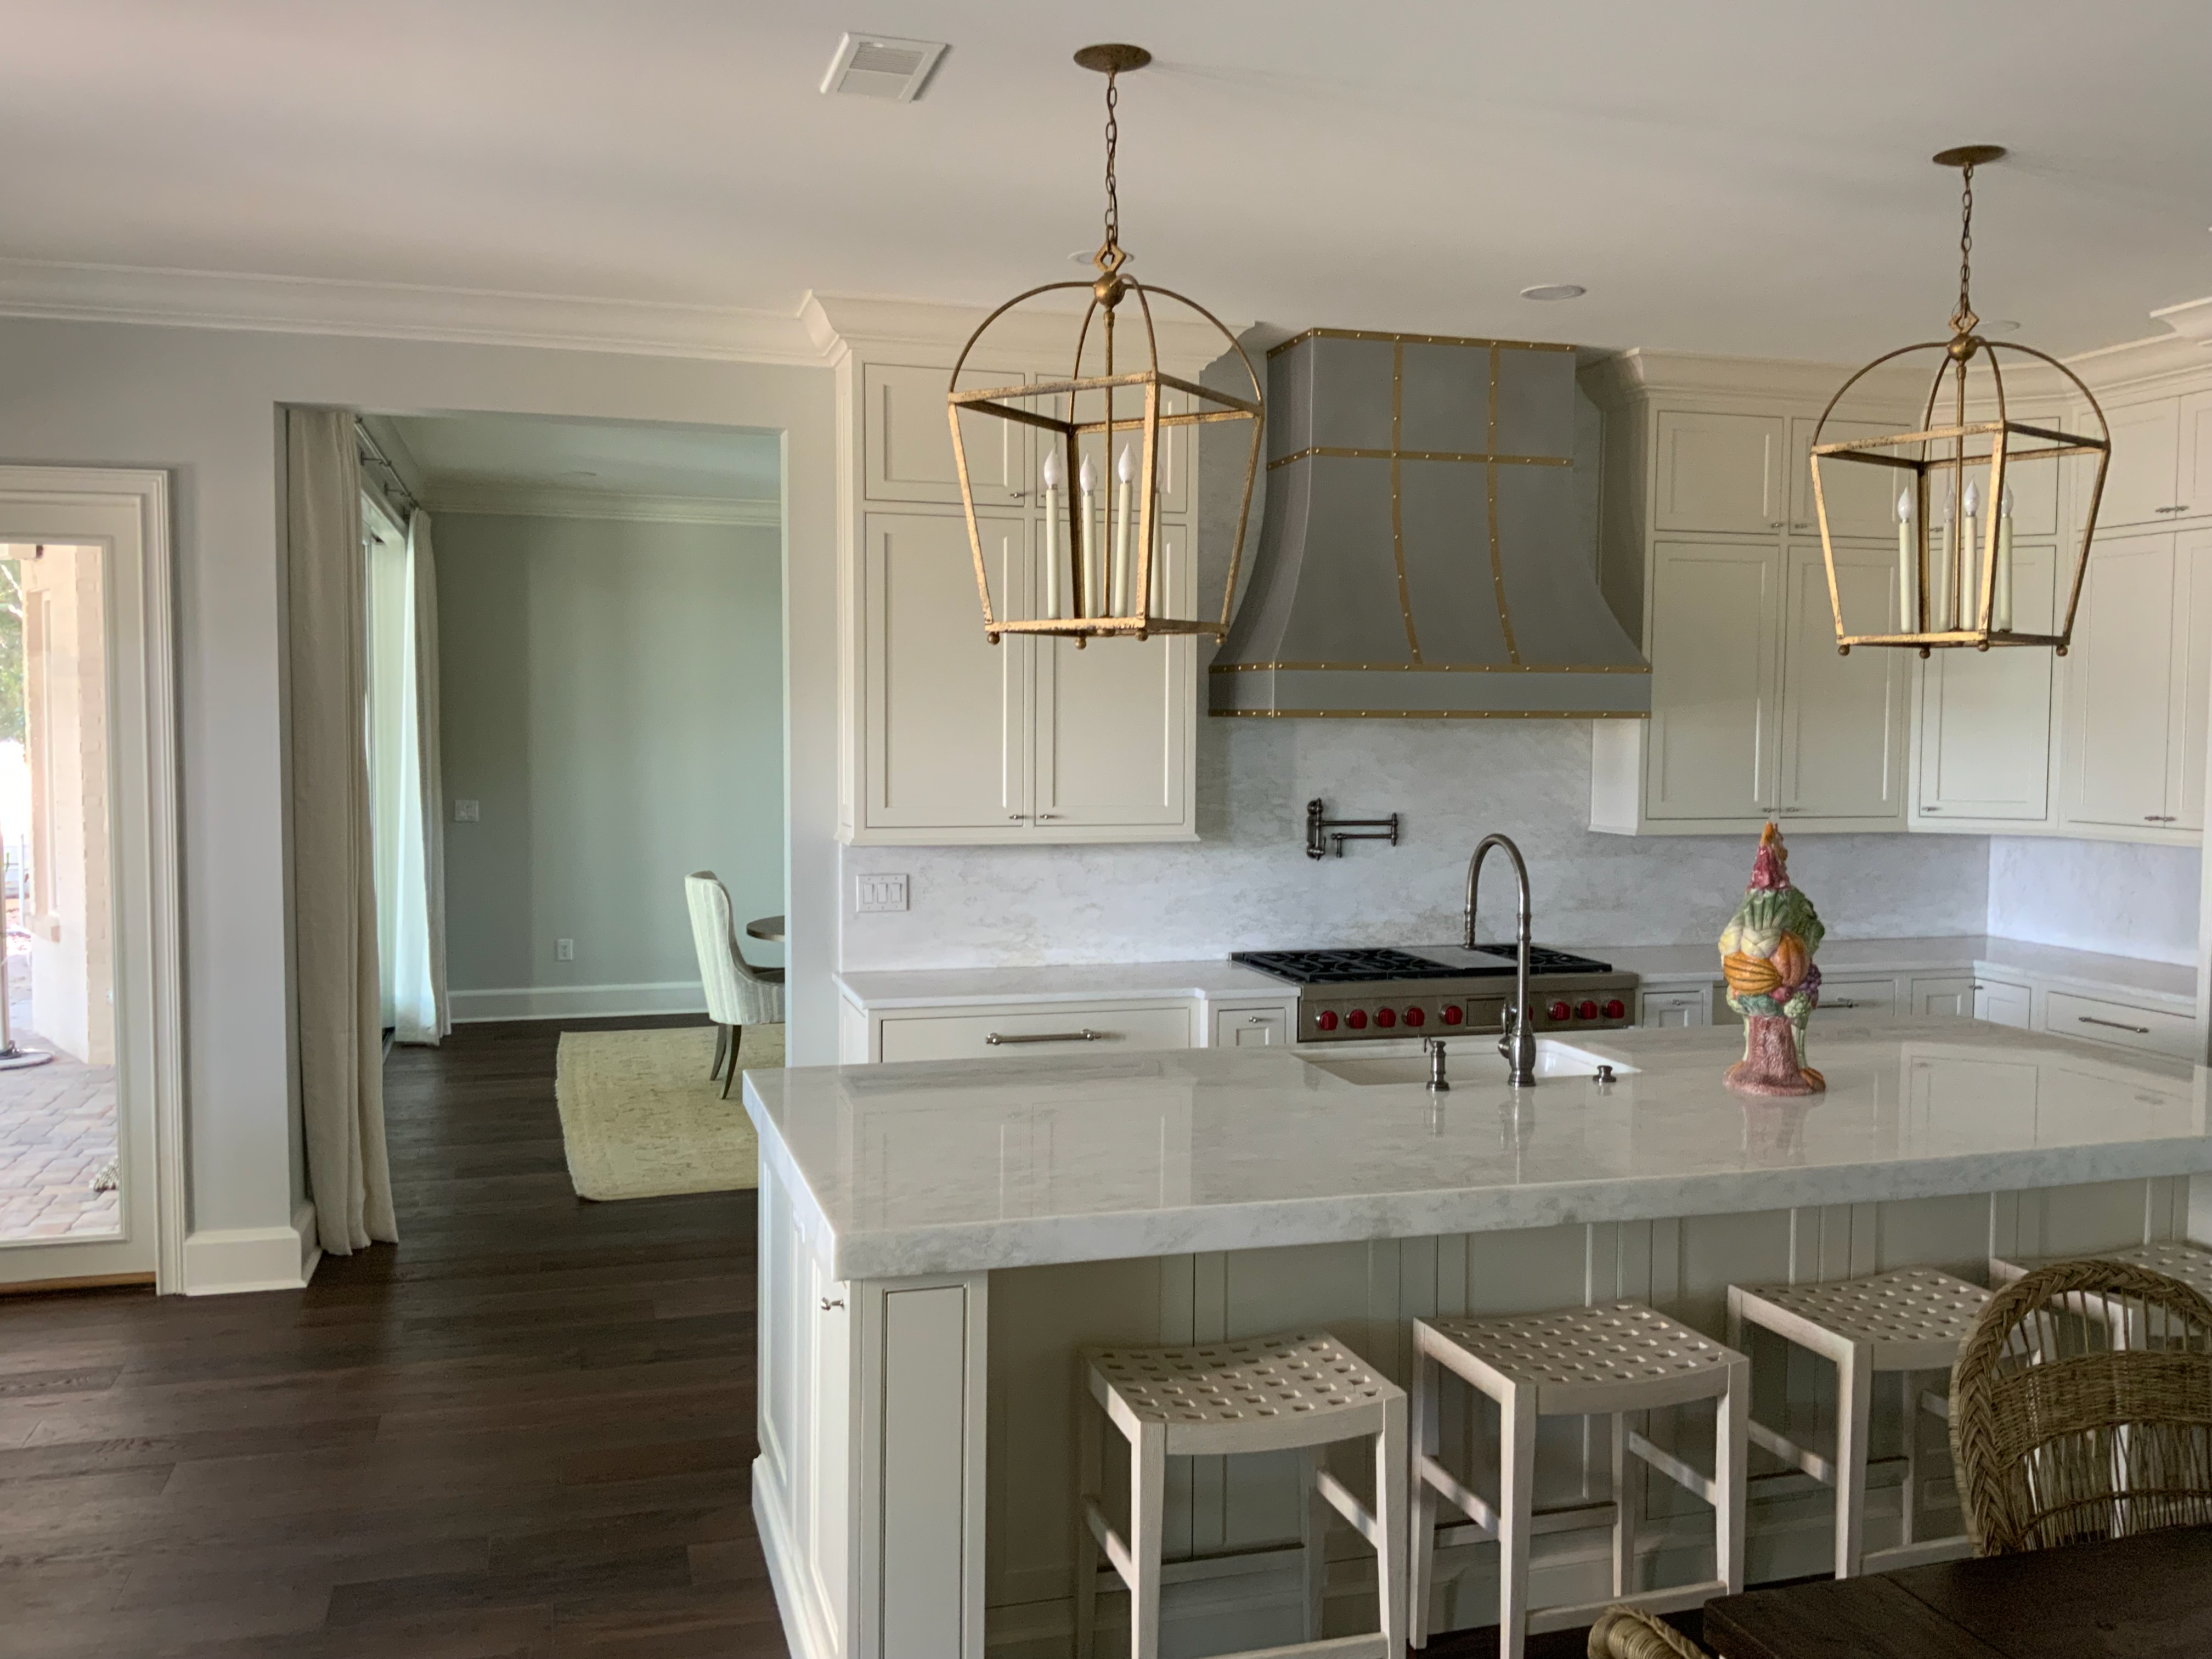 Wondrous traditional kitchen with white cabinets, white countertops, sleek marble backsplash, featuring a captivating range hood